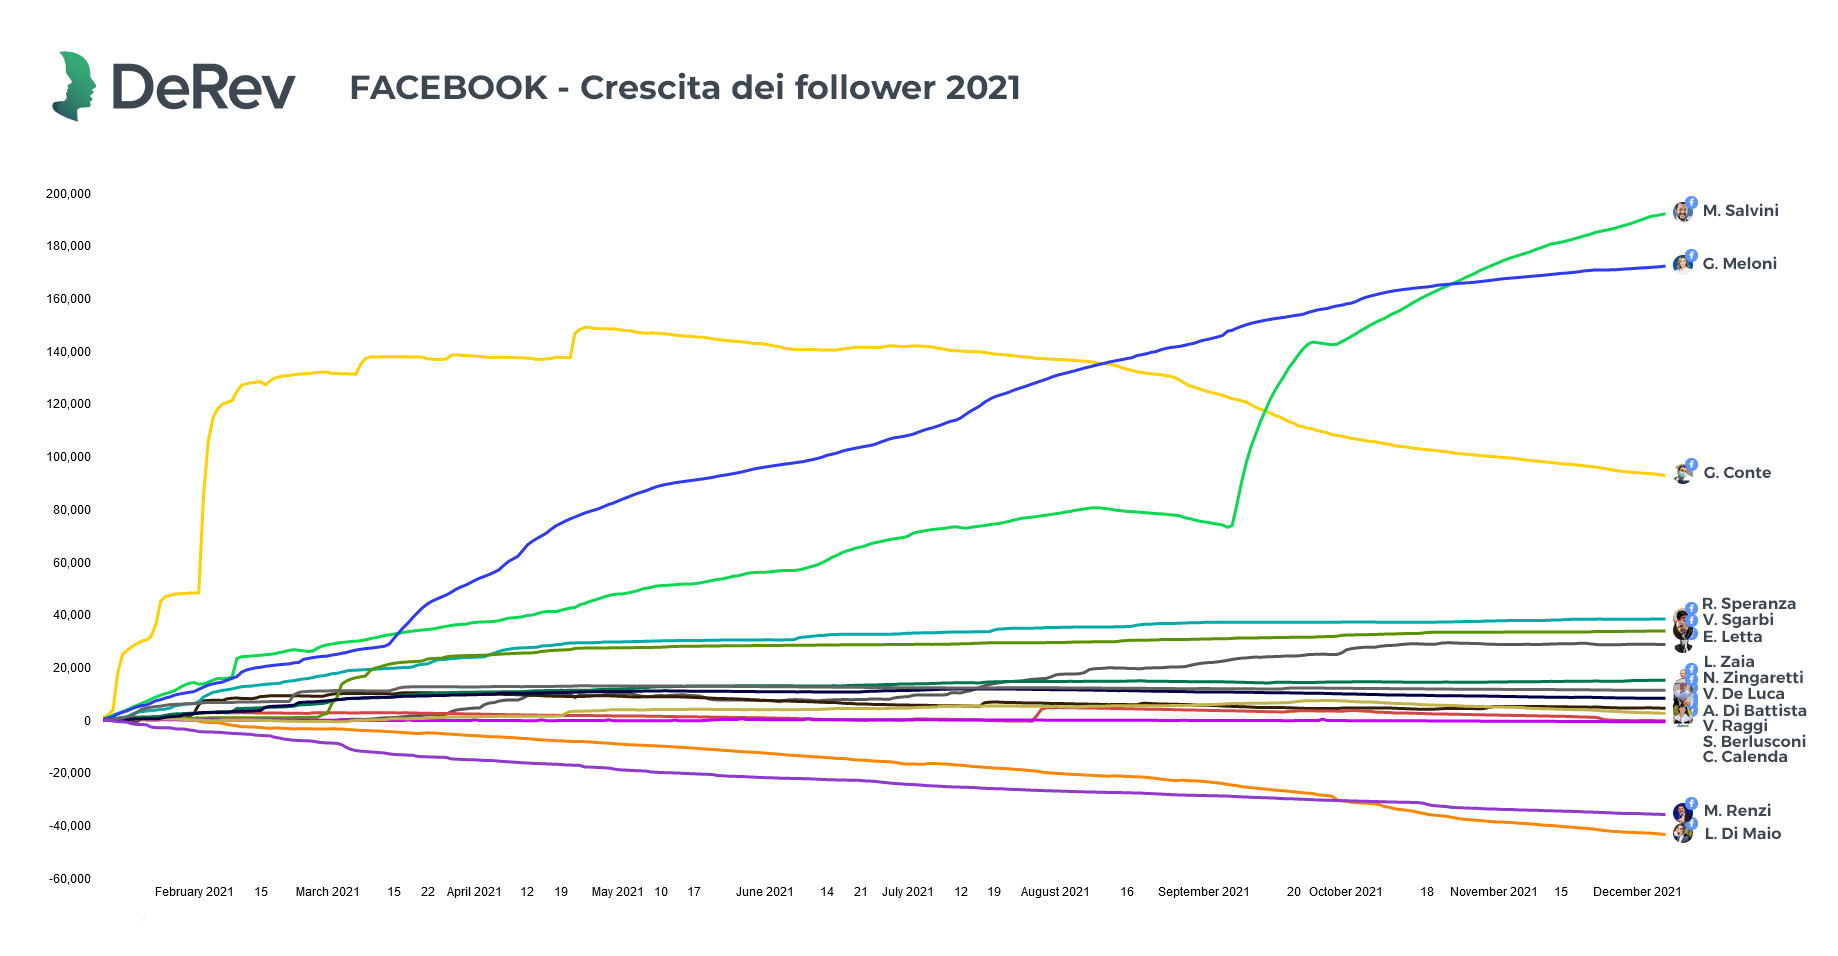 Politici sui social per crescita di follower su Facebook, DeRev, ricerca 2021 